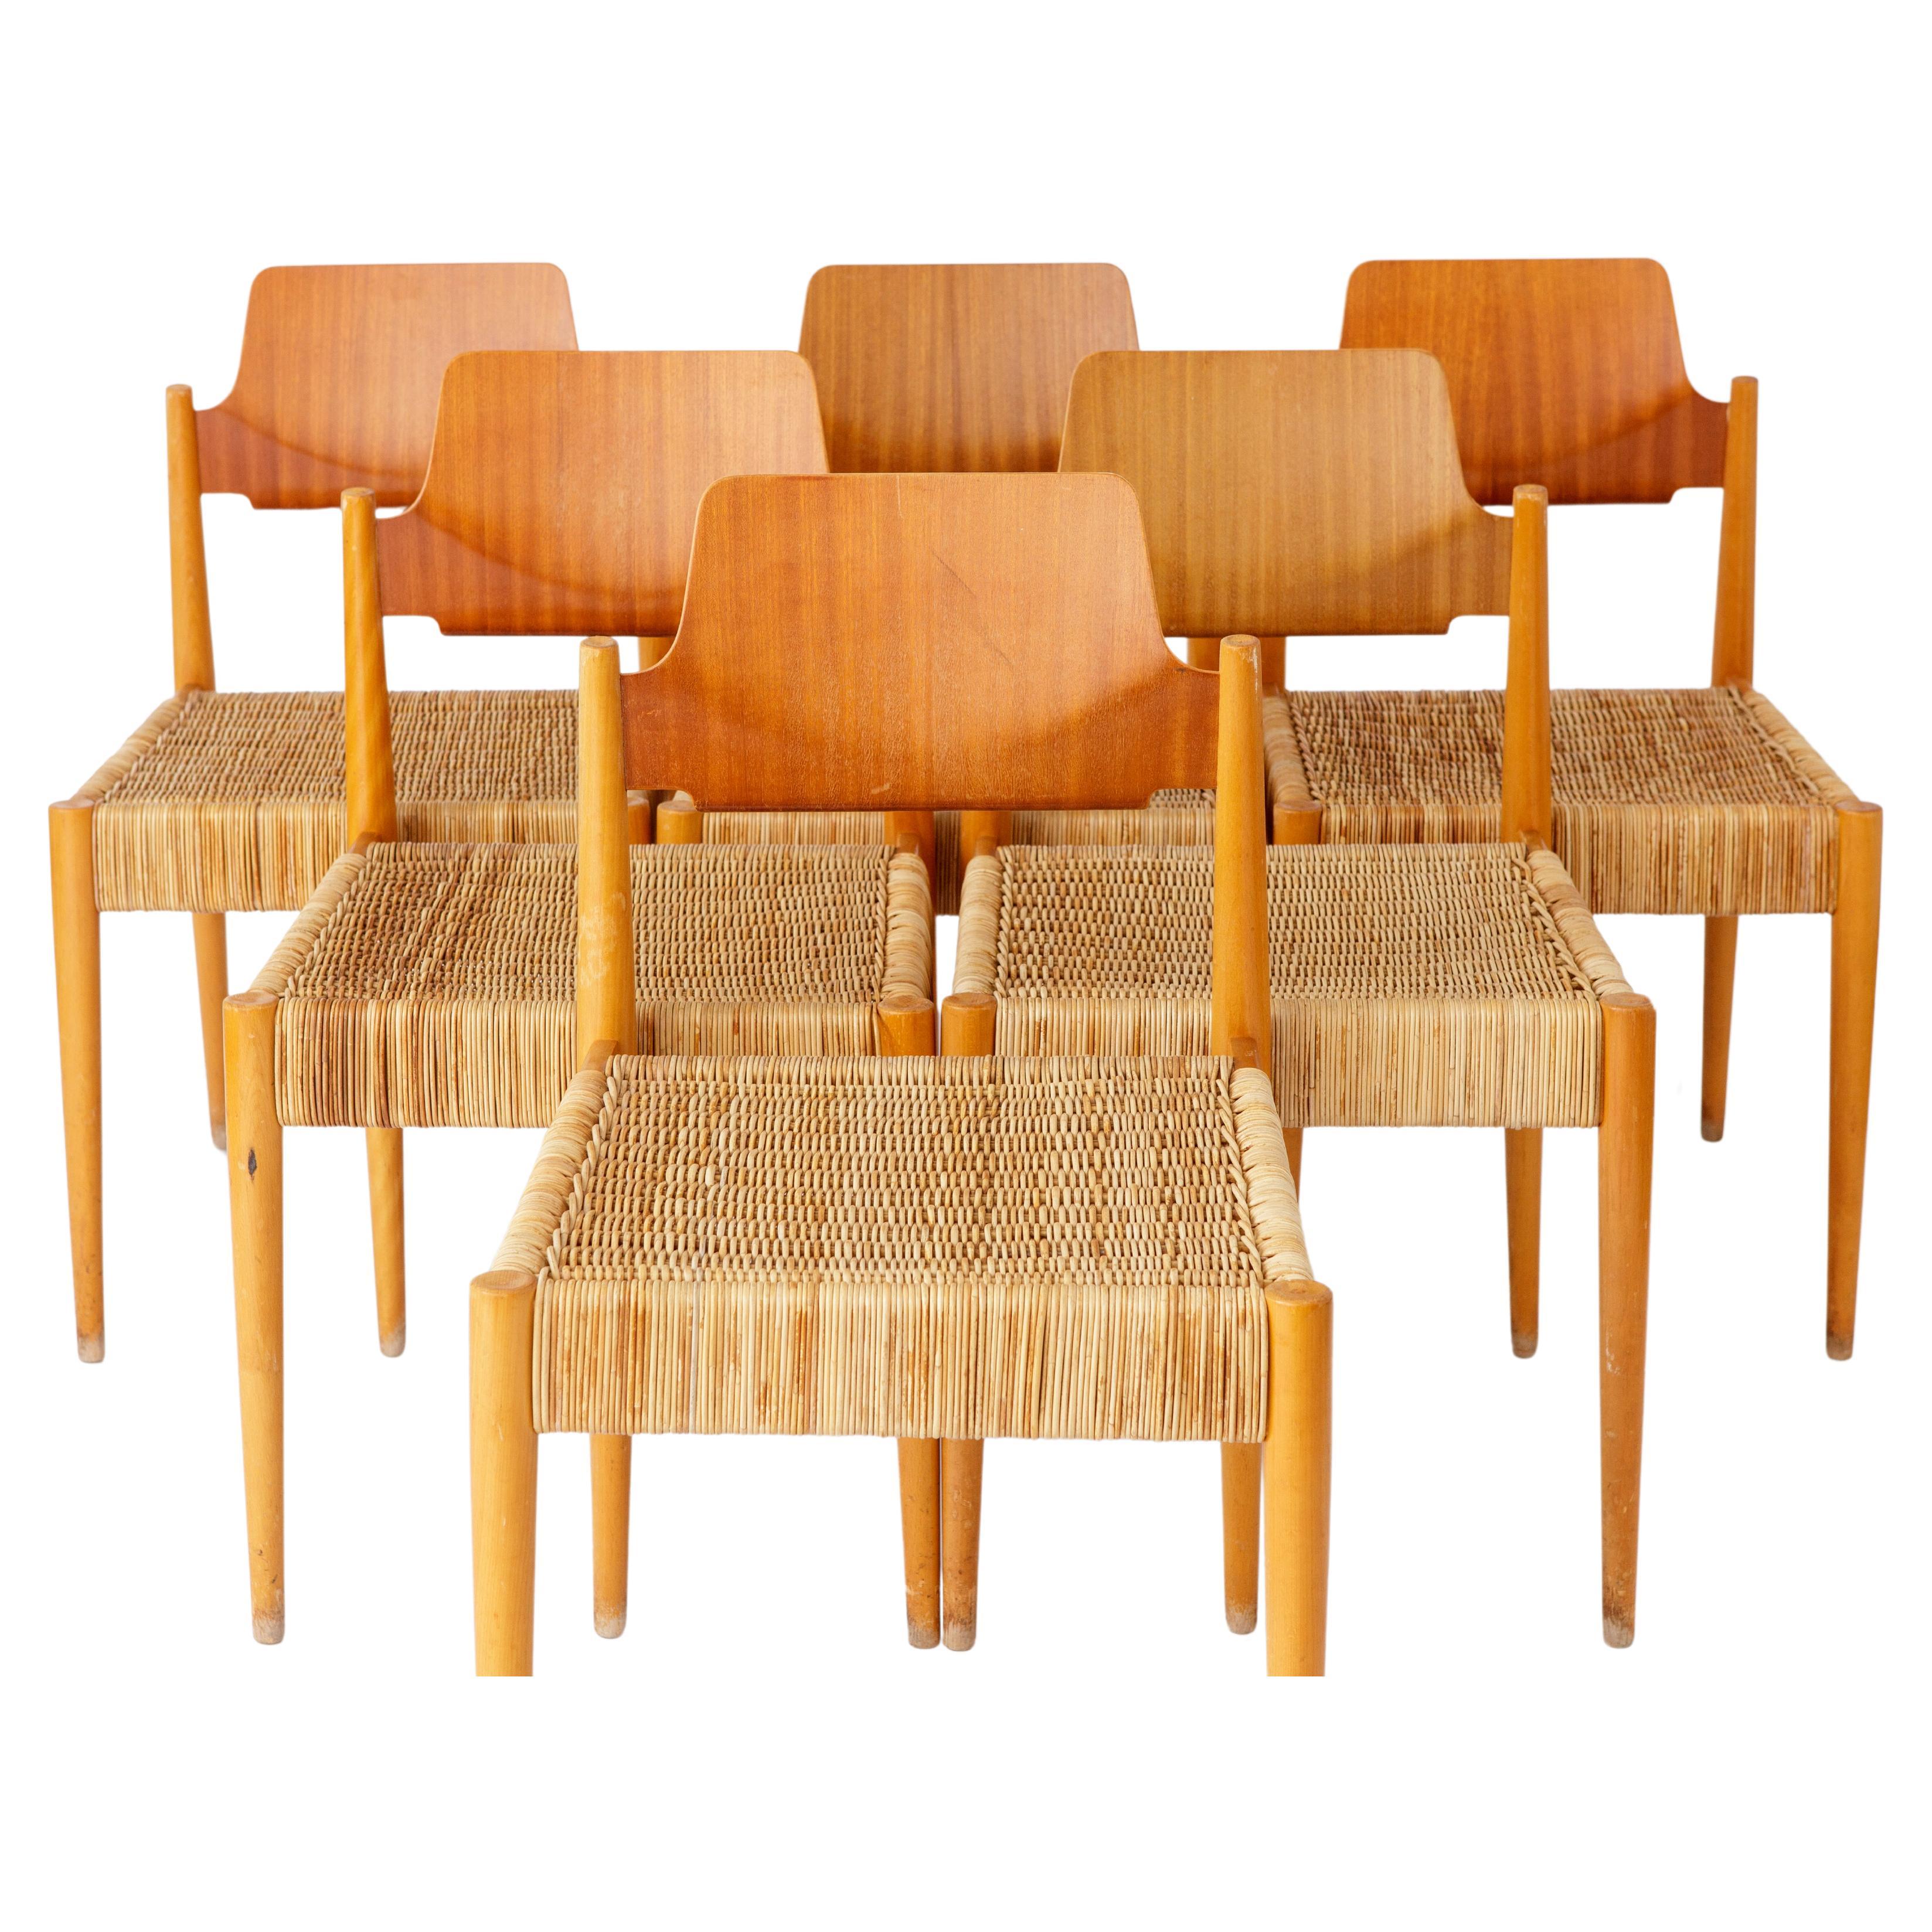 6 Chairs Egon Eiermann Chairs #SE19 Bauhaus Germany 1950s Vintage For Sale